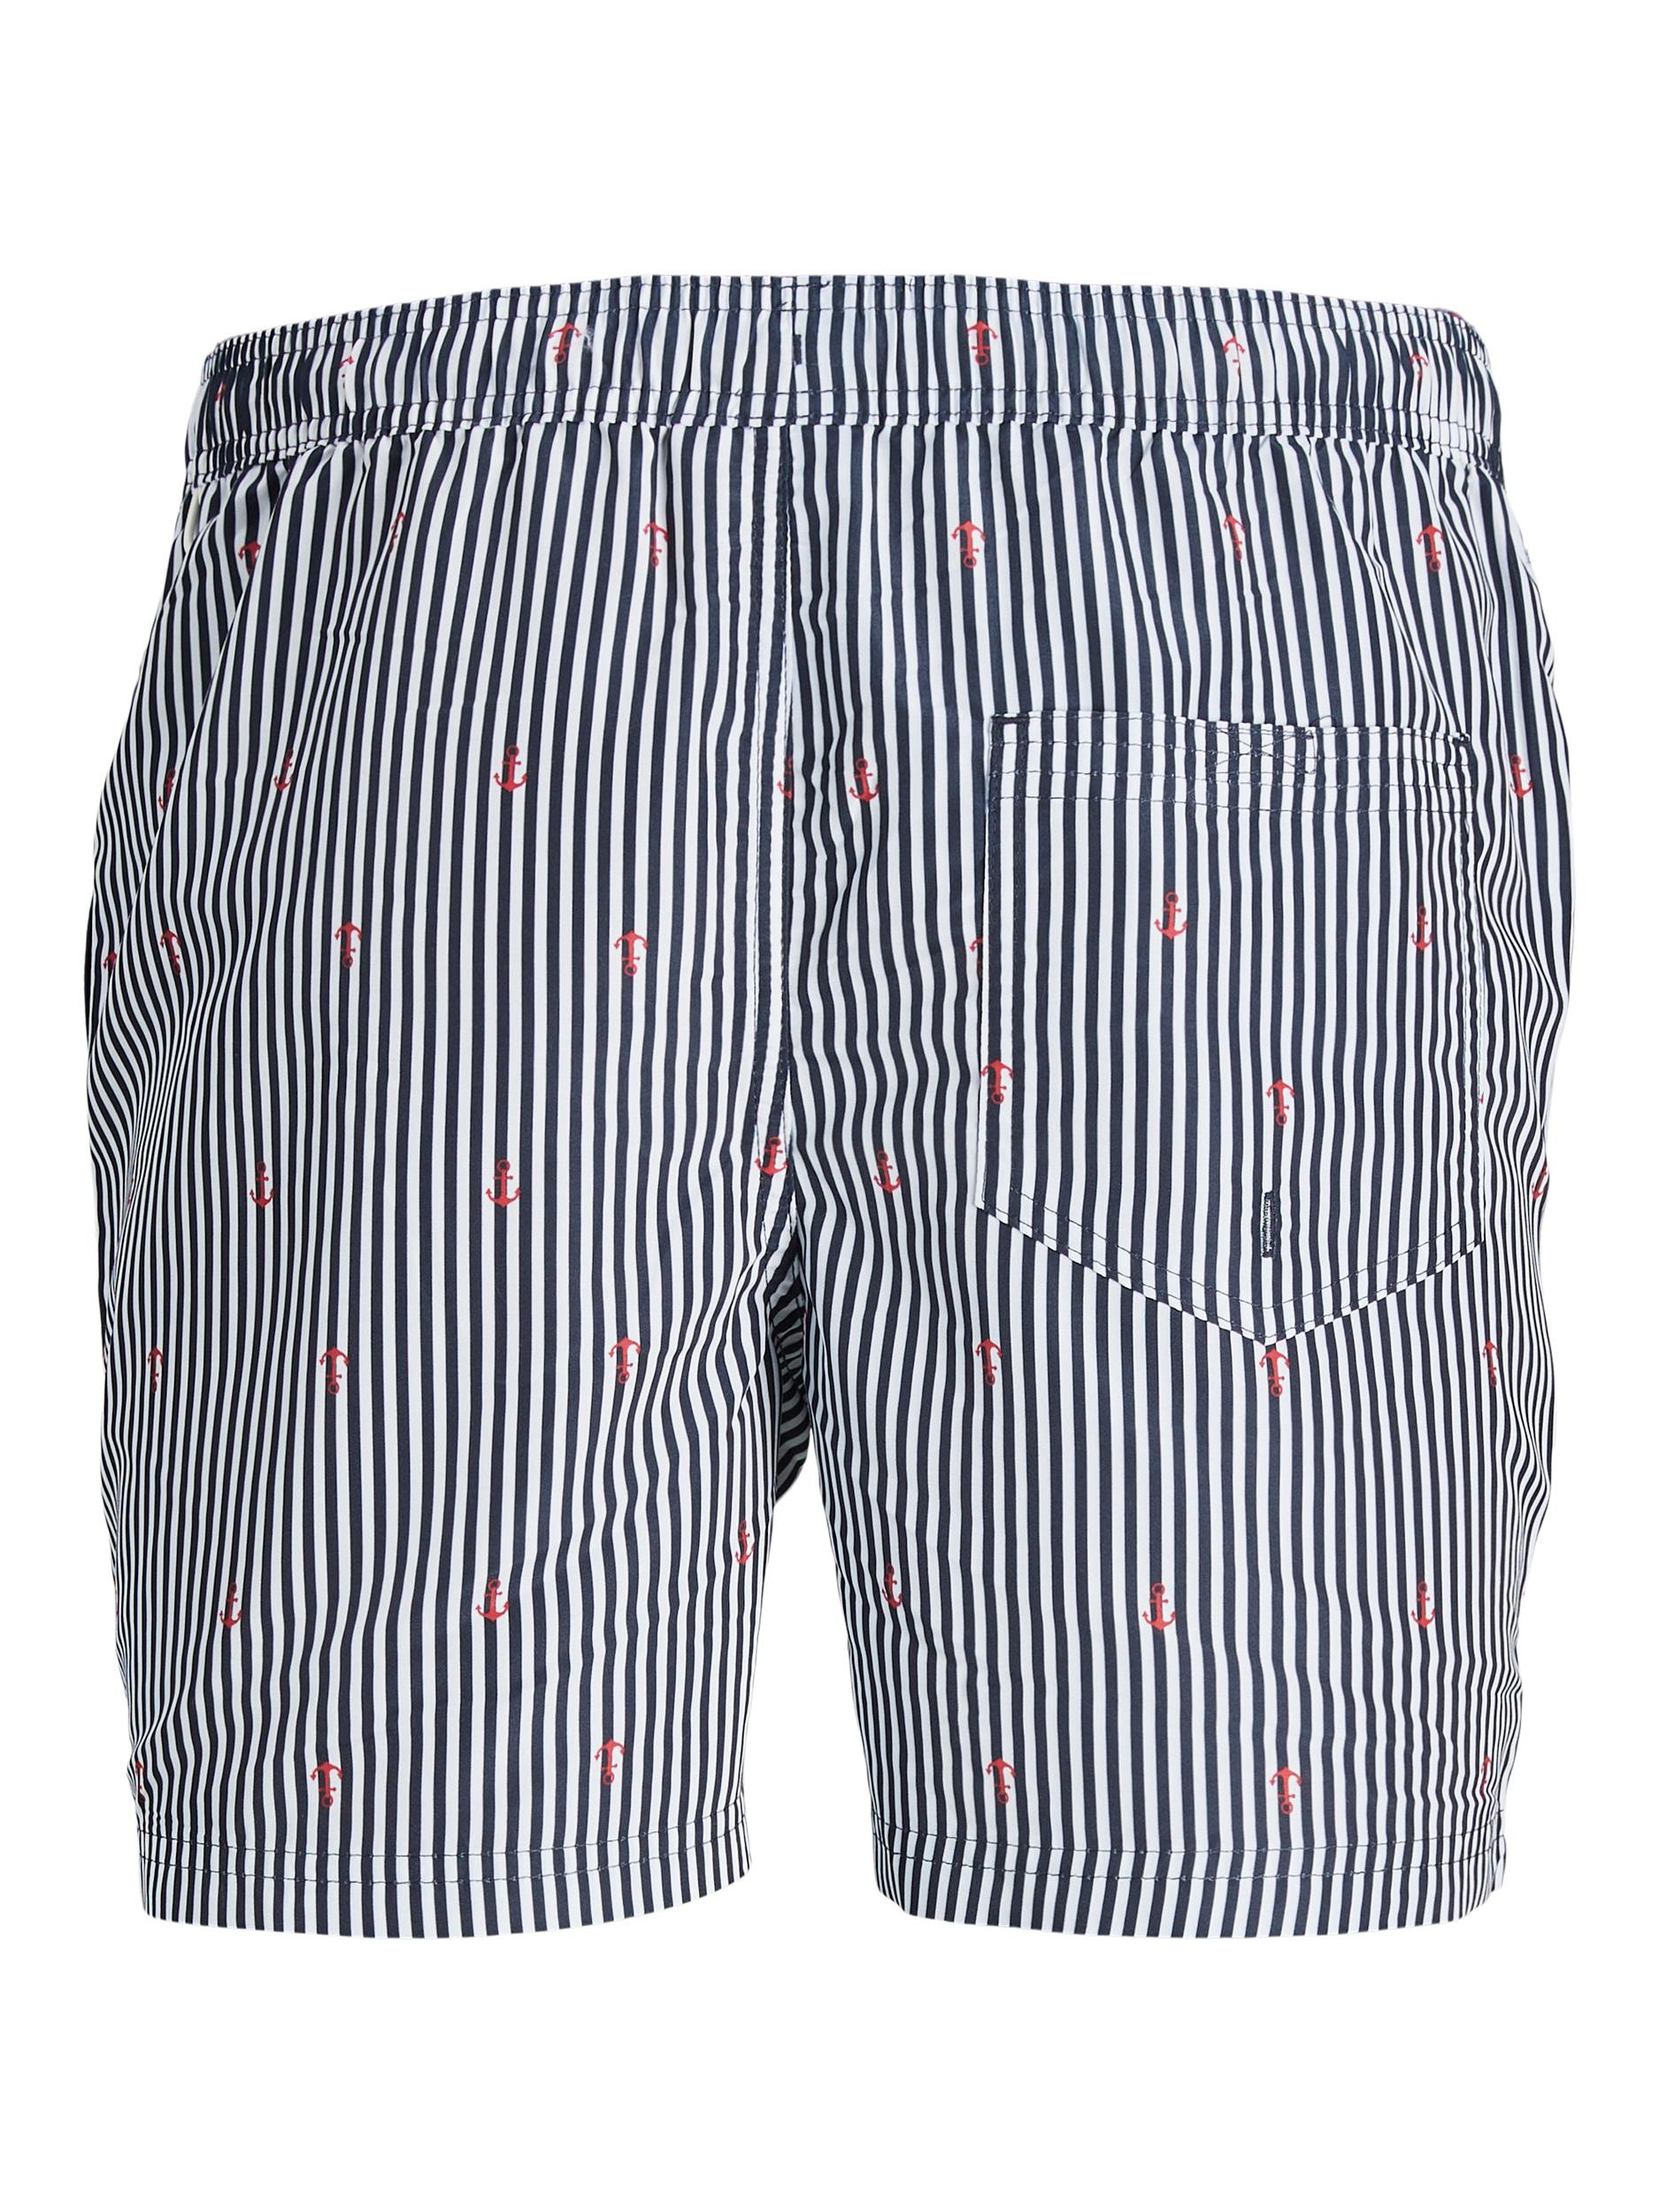 Jack & Jones - Regular fit striped swim trunks with print, Dark Blue, large image number 1